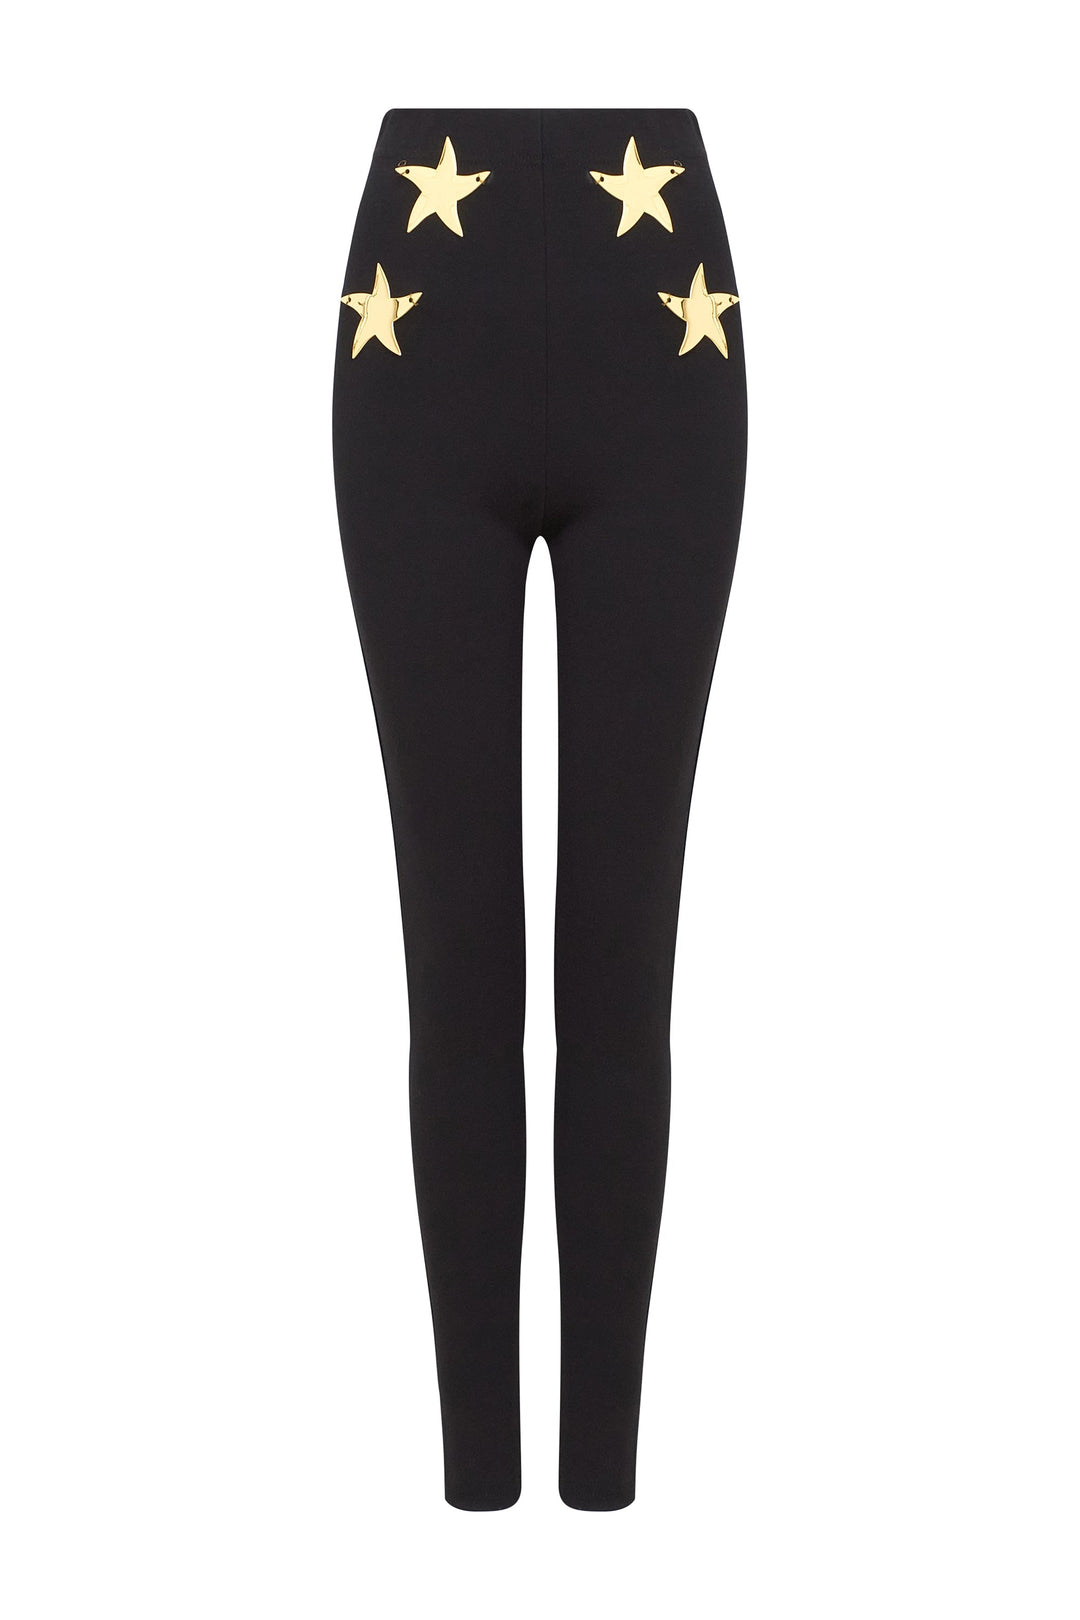 Black jersey leggings with stars